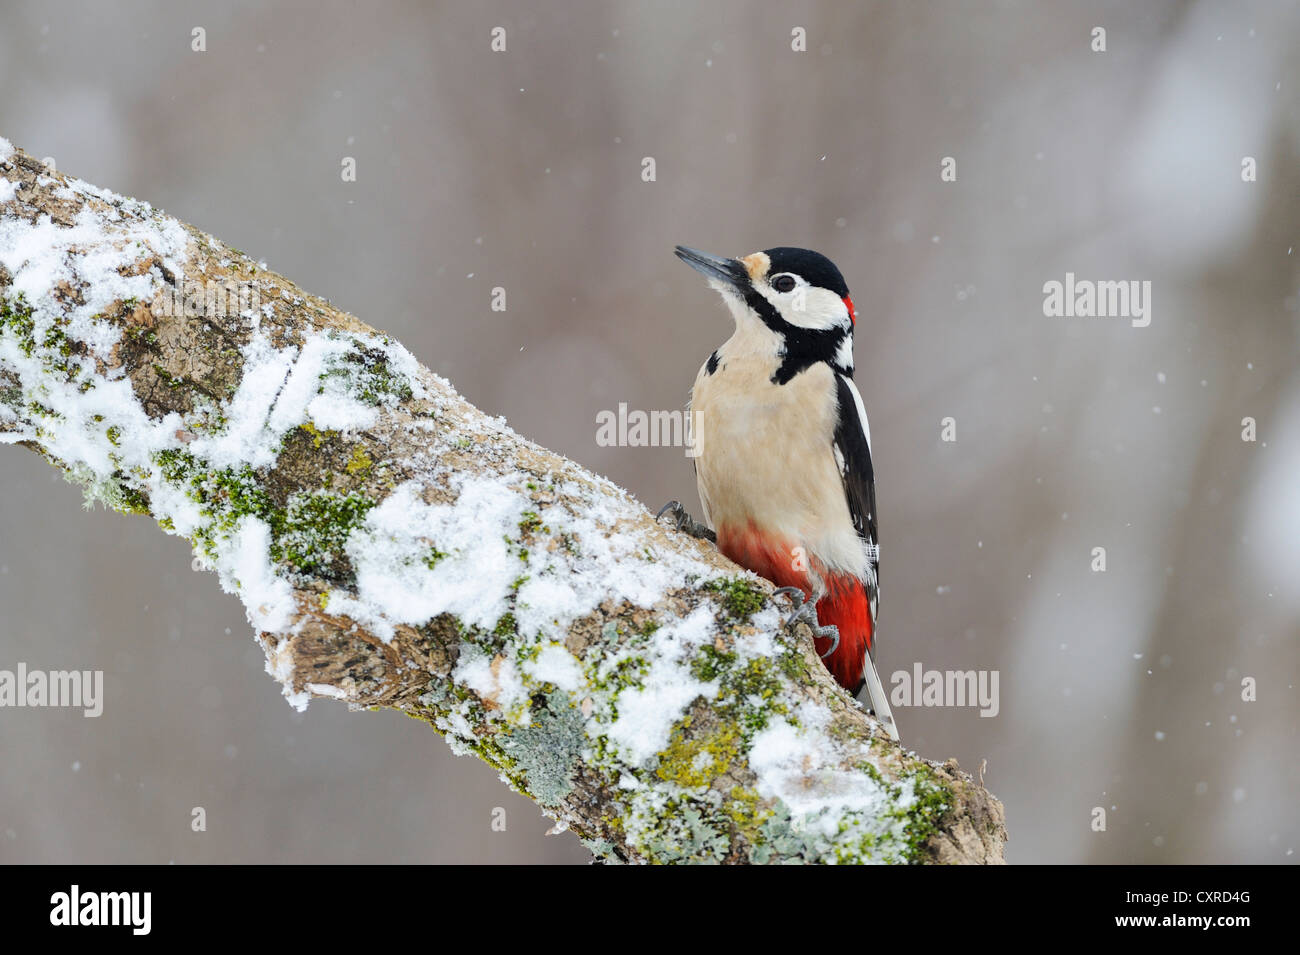 Great Spotted Woodpecker (Dendrocopos major) perché sur une branche, Bulgarie, Europe Banque D'Images